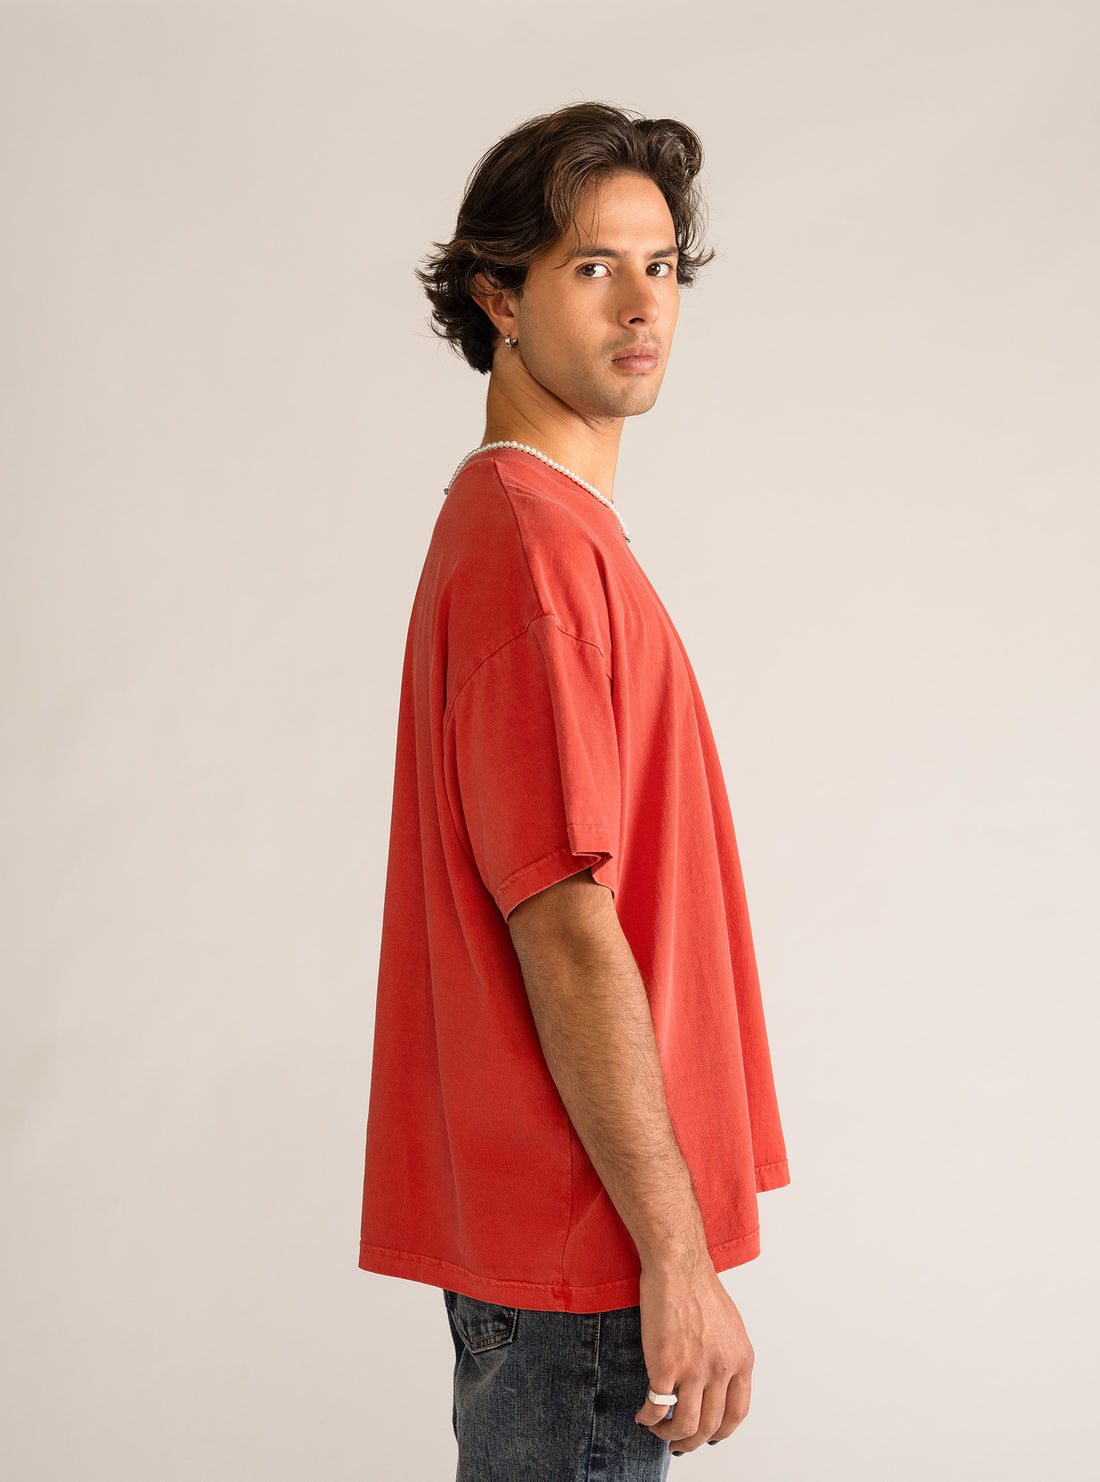 Flaming Hot T-Shirt, Rojo